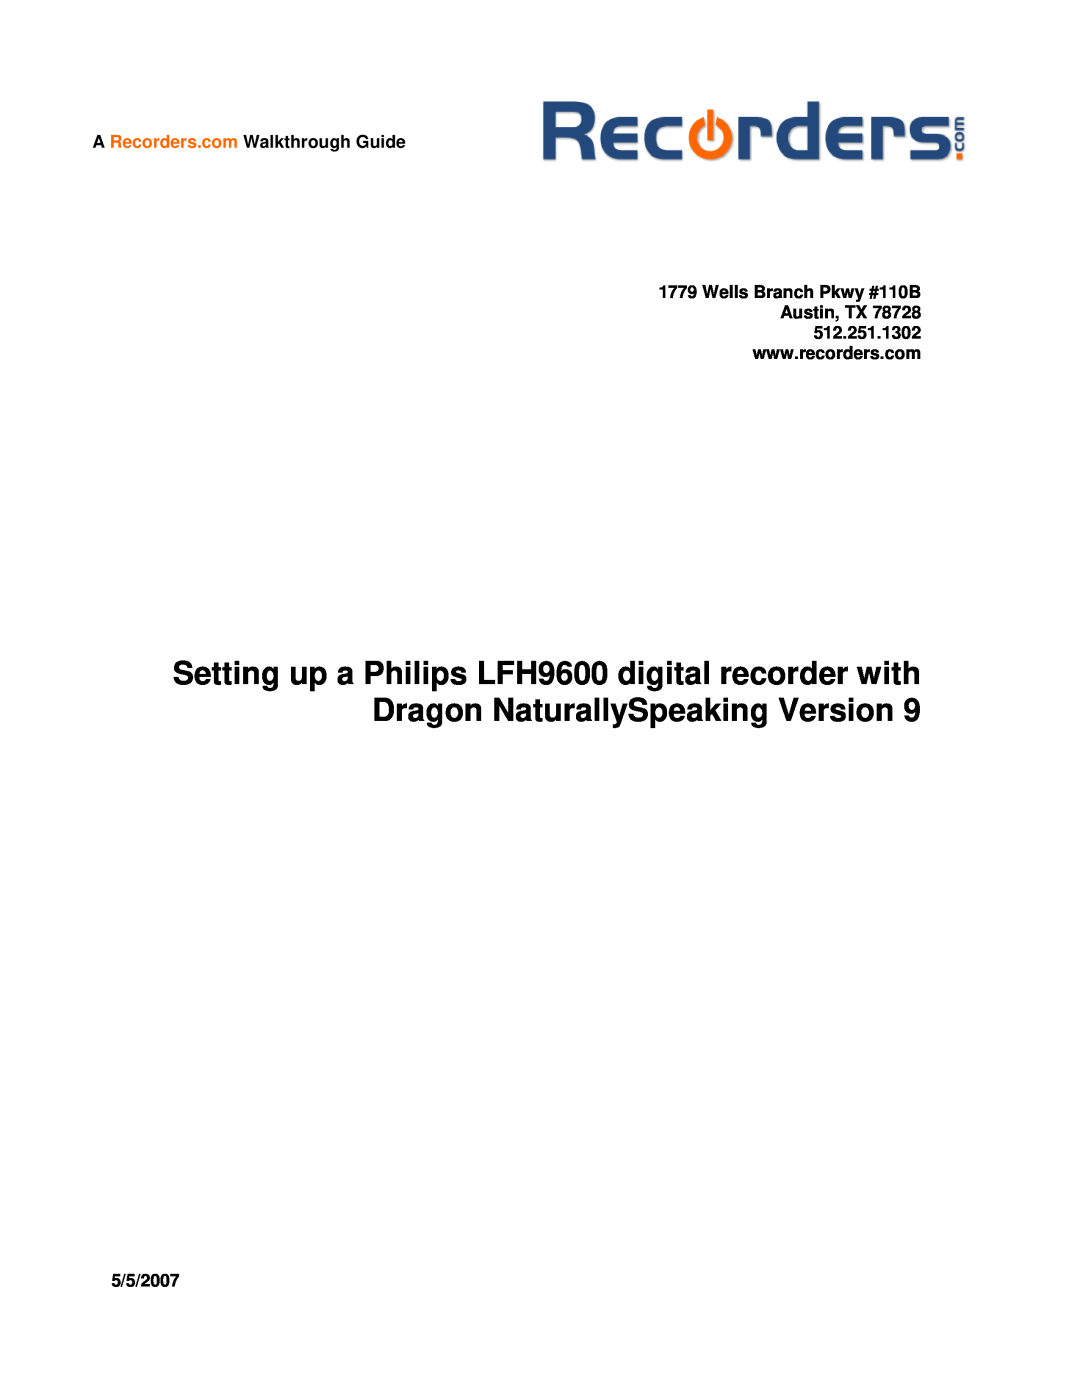 PYLE Audio LFH-9600 manual A Recorders.com Walkthrough Guide, 5/5/2007 